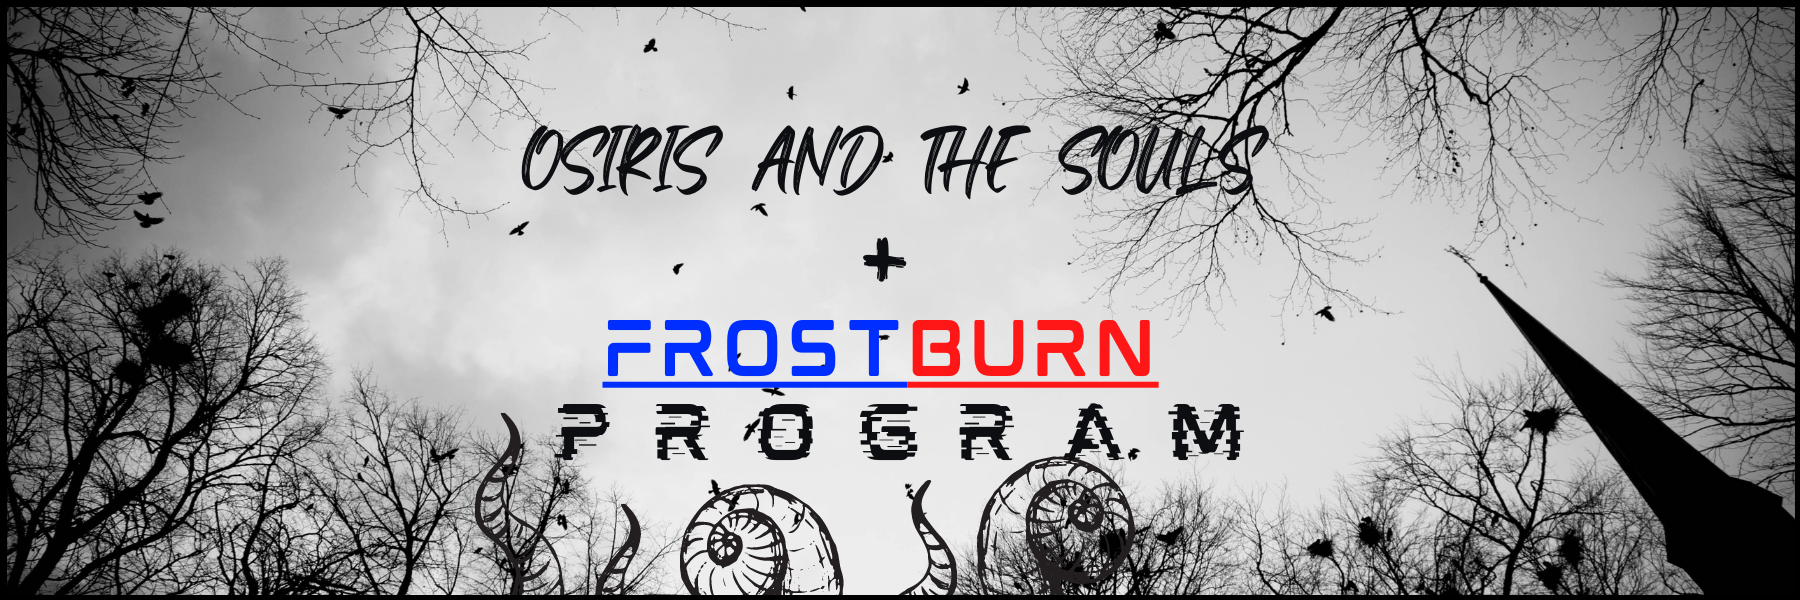 Osiris and the Souls + Frostburn Program